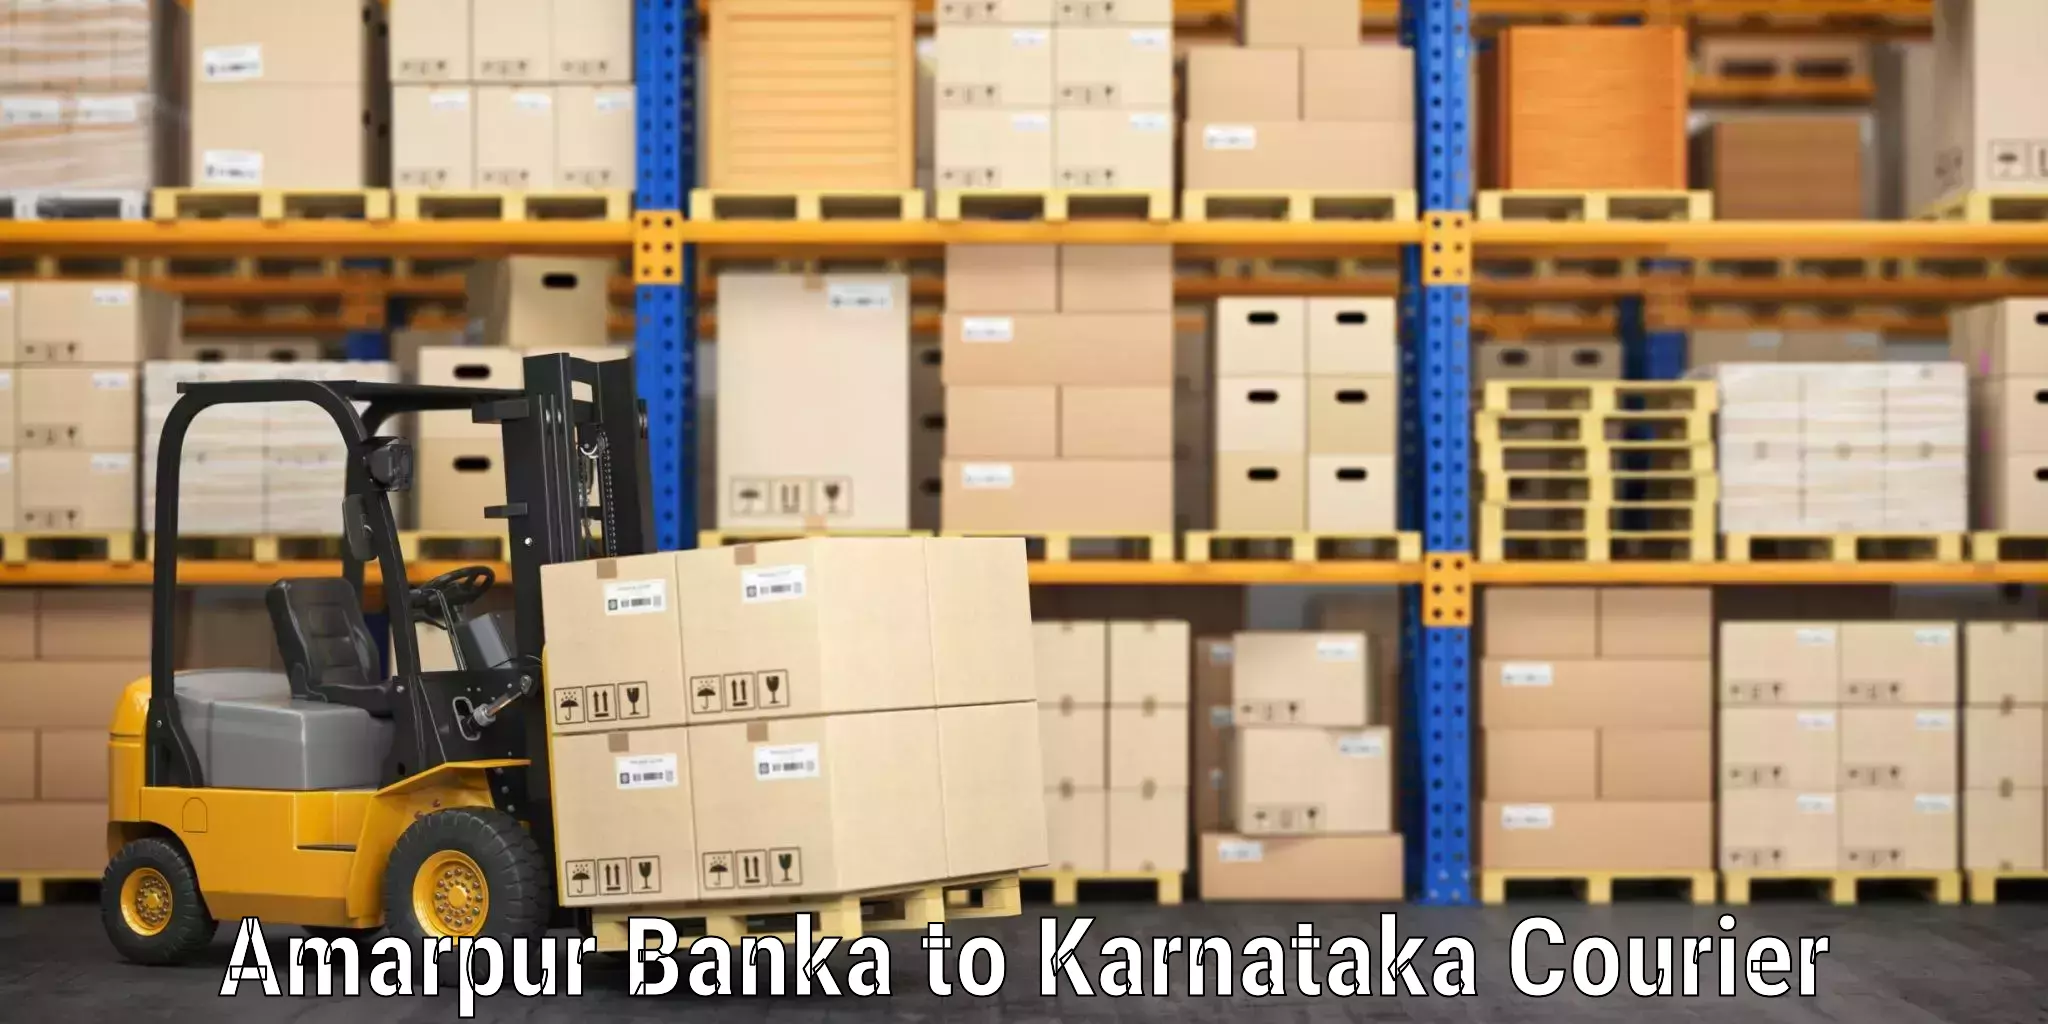 Luggage shipping specialists Amarpur Banka to Banavara